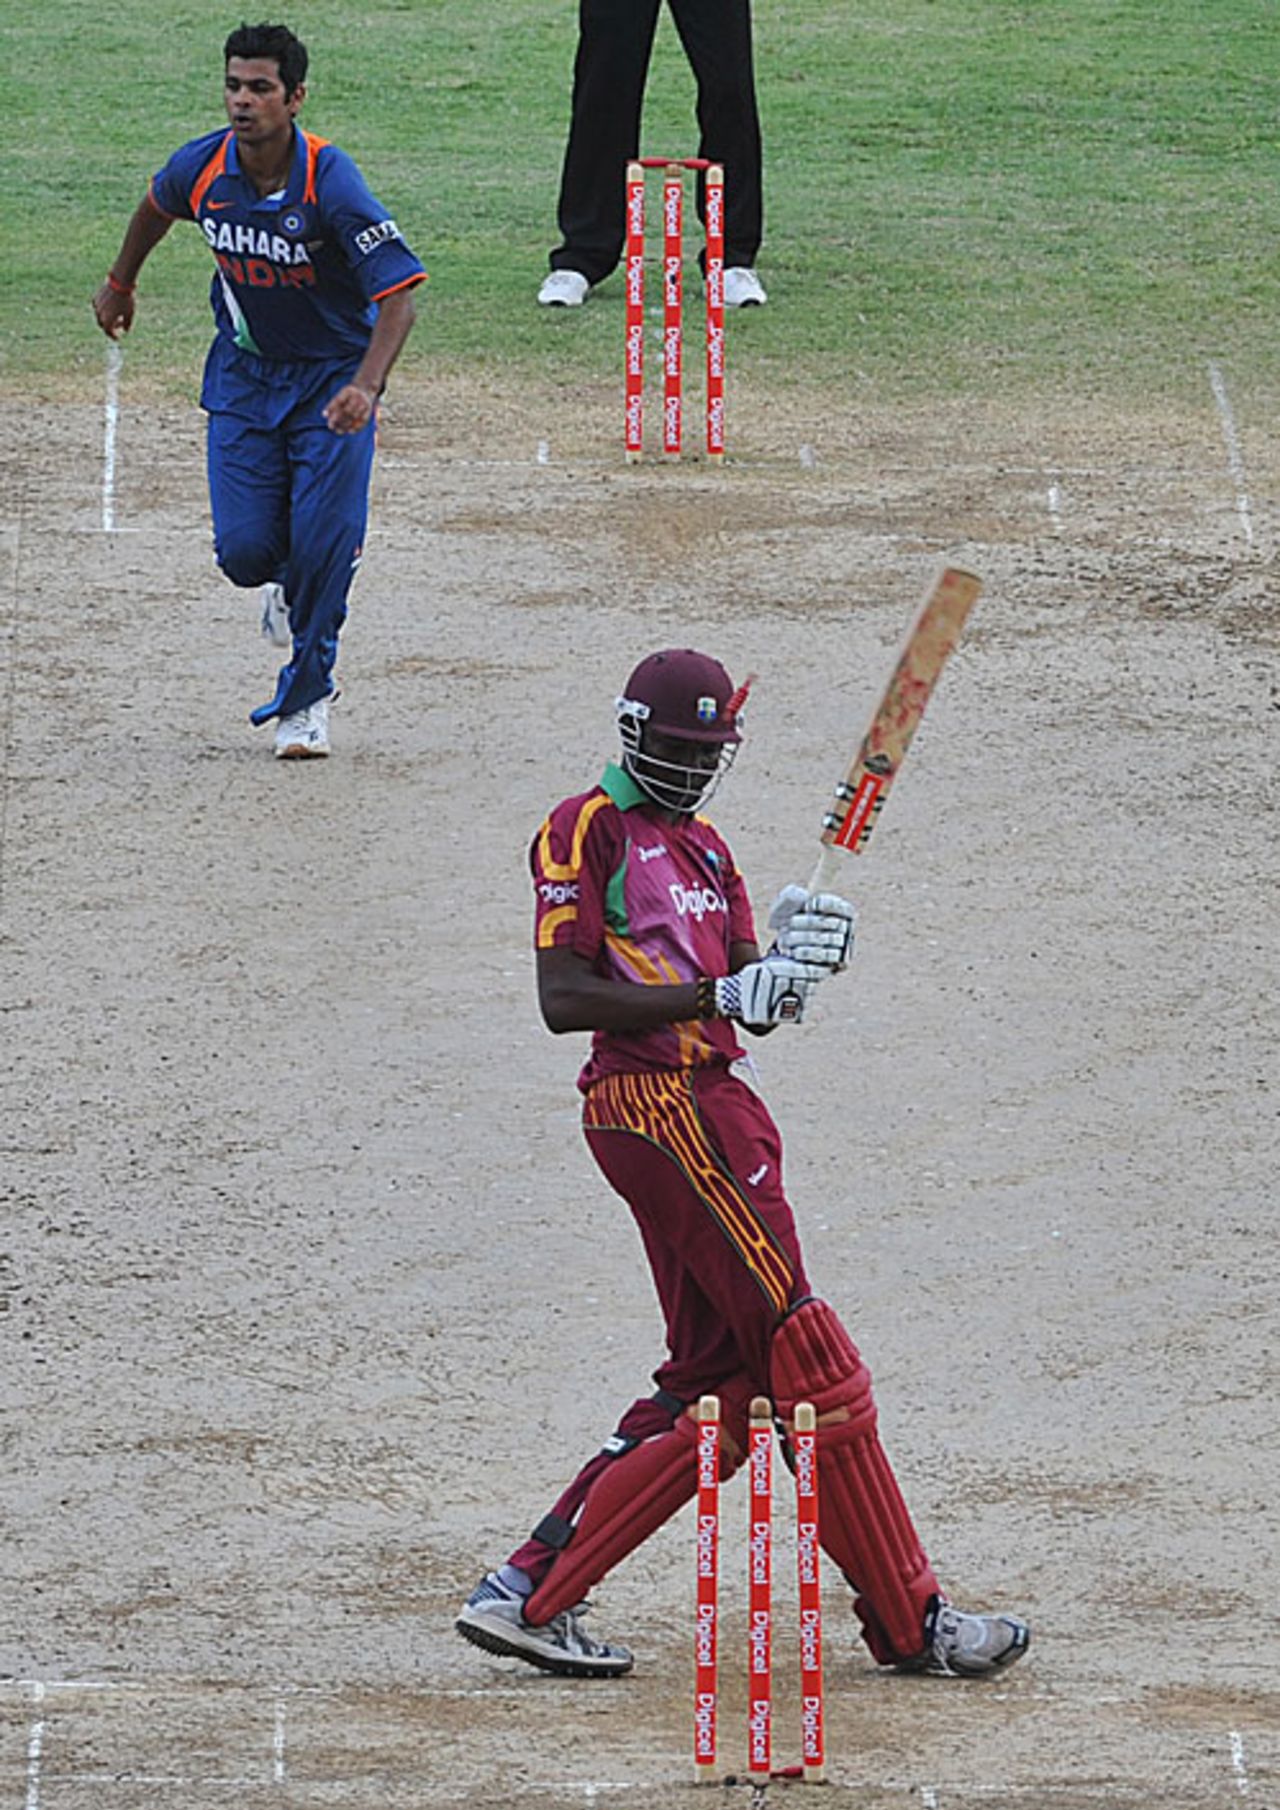 Sulieman Benn is castled by RP Singh, West Indies v India, 1st ODI, Kingston, June 26, 2009 